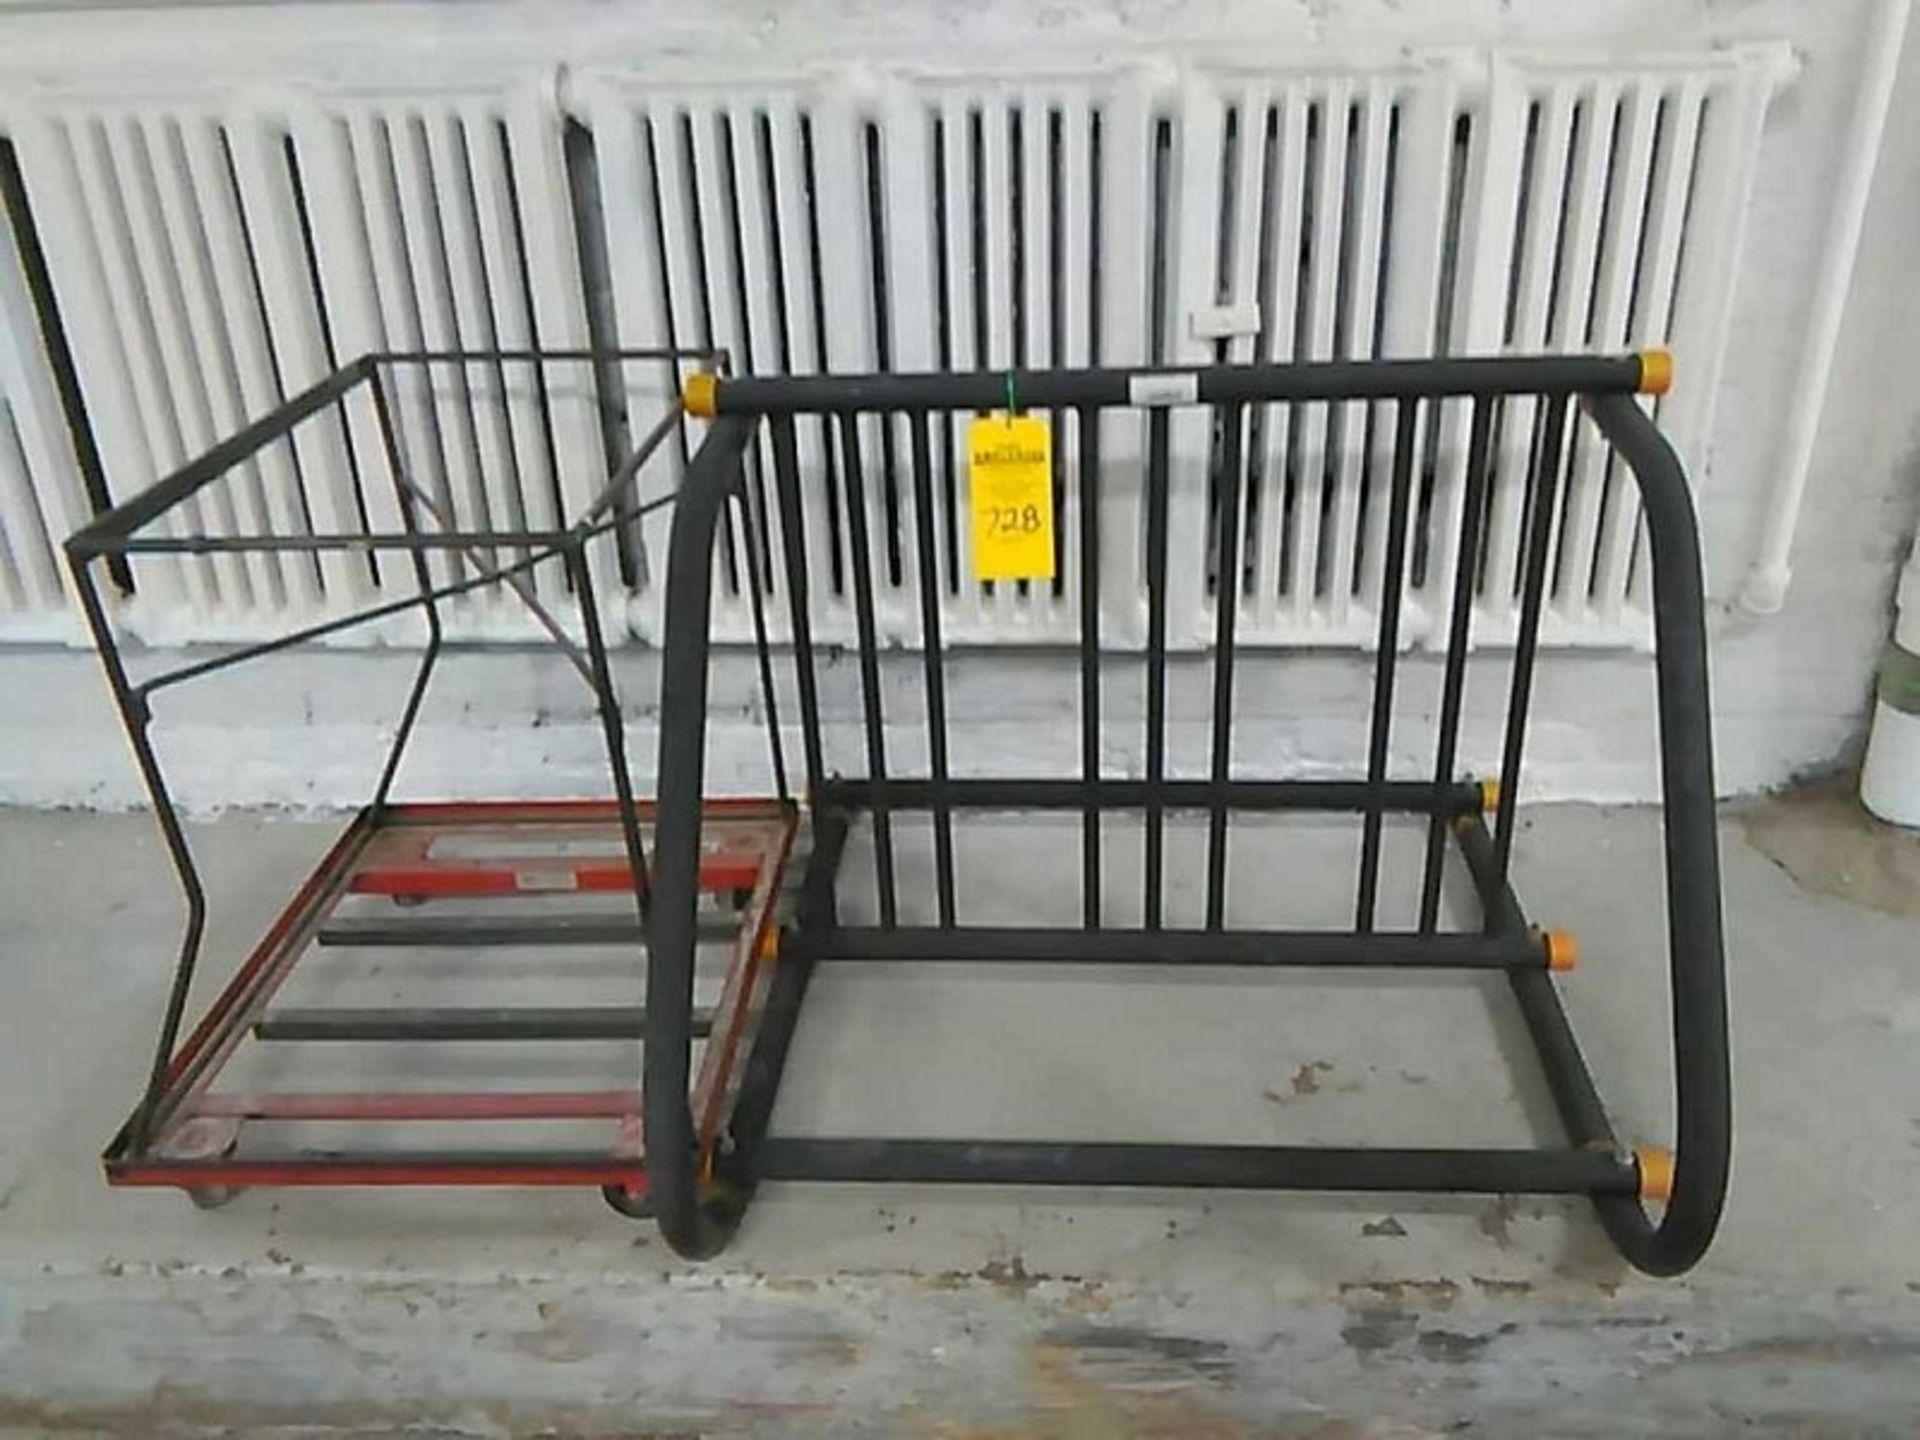 Bike rack in small cart - Image 2 of 2